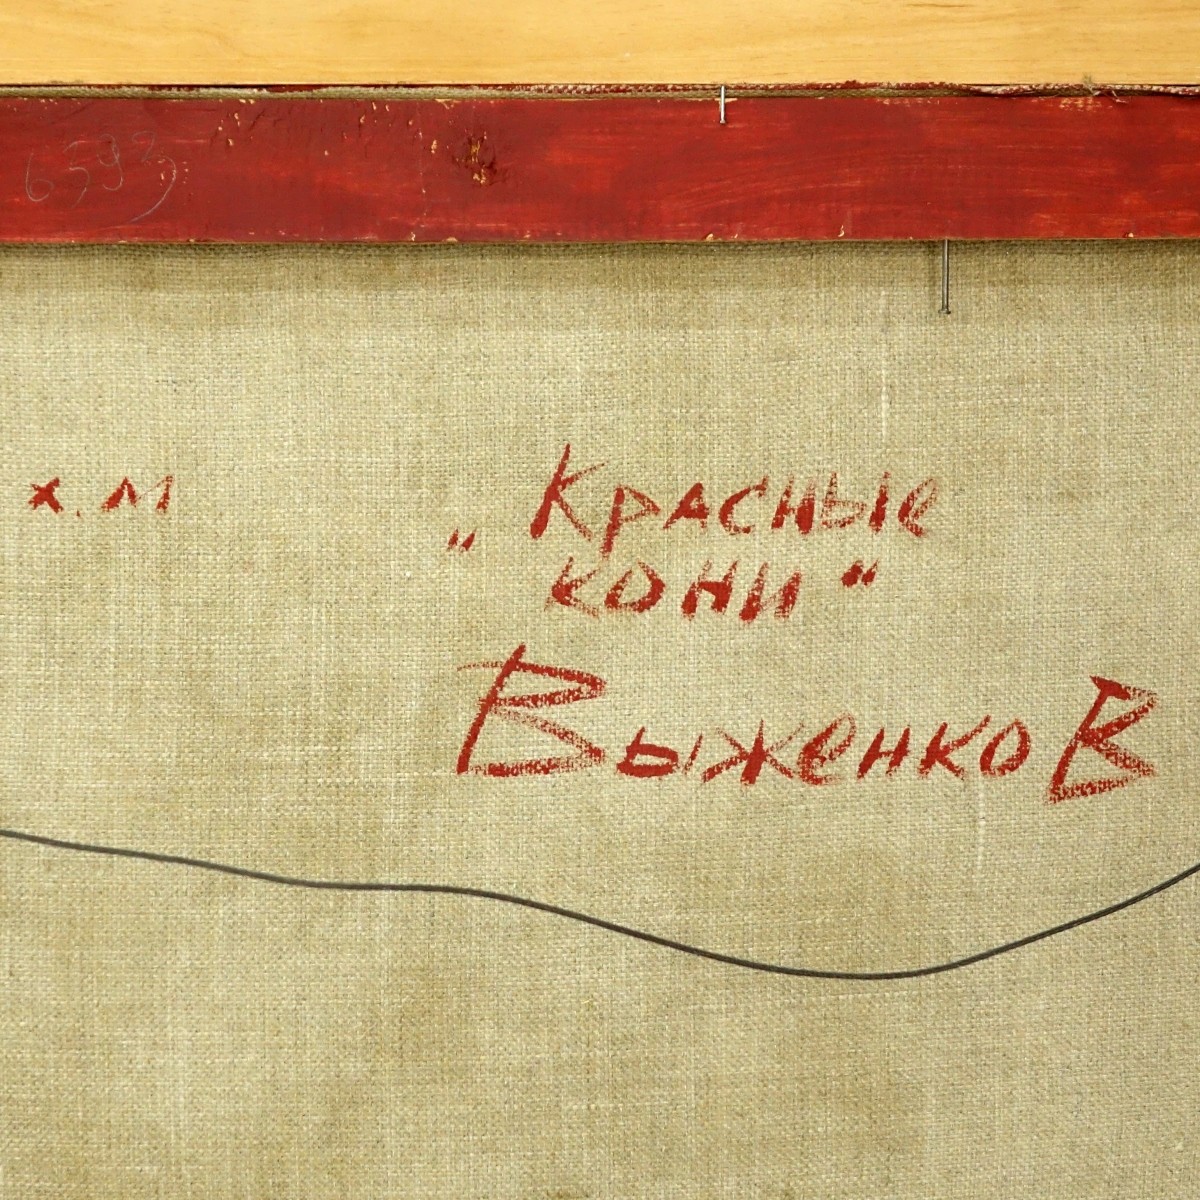 Bigenko (20th Century) Oil On Canvas "Red Horses"